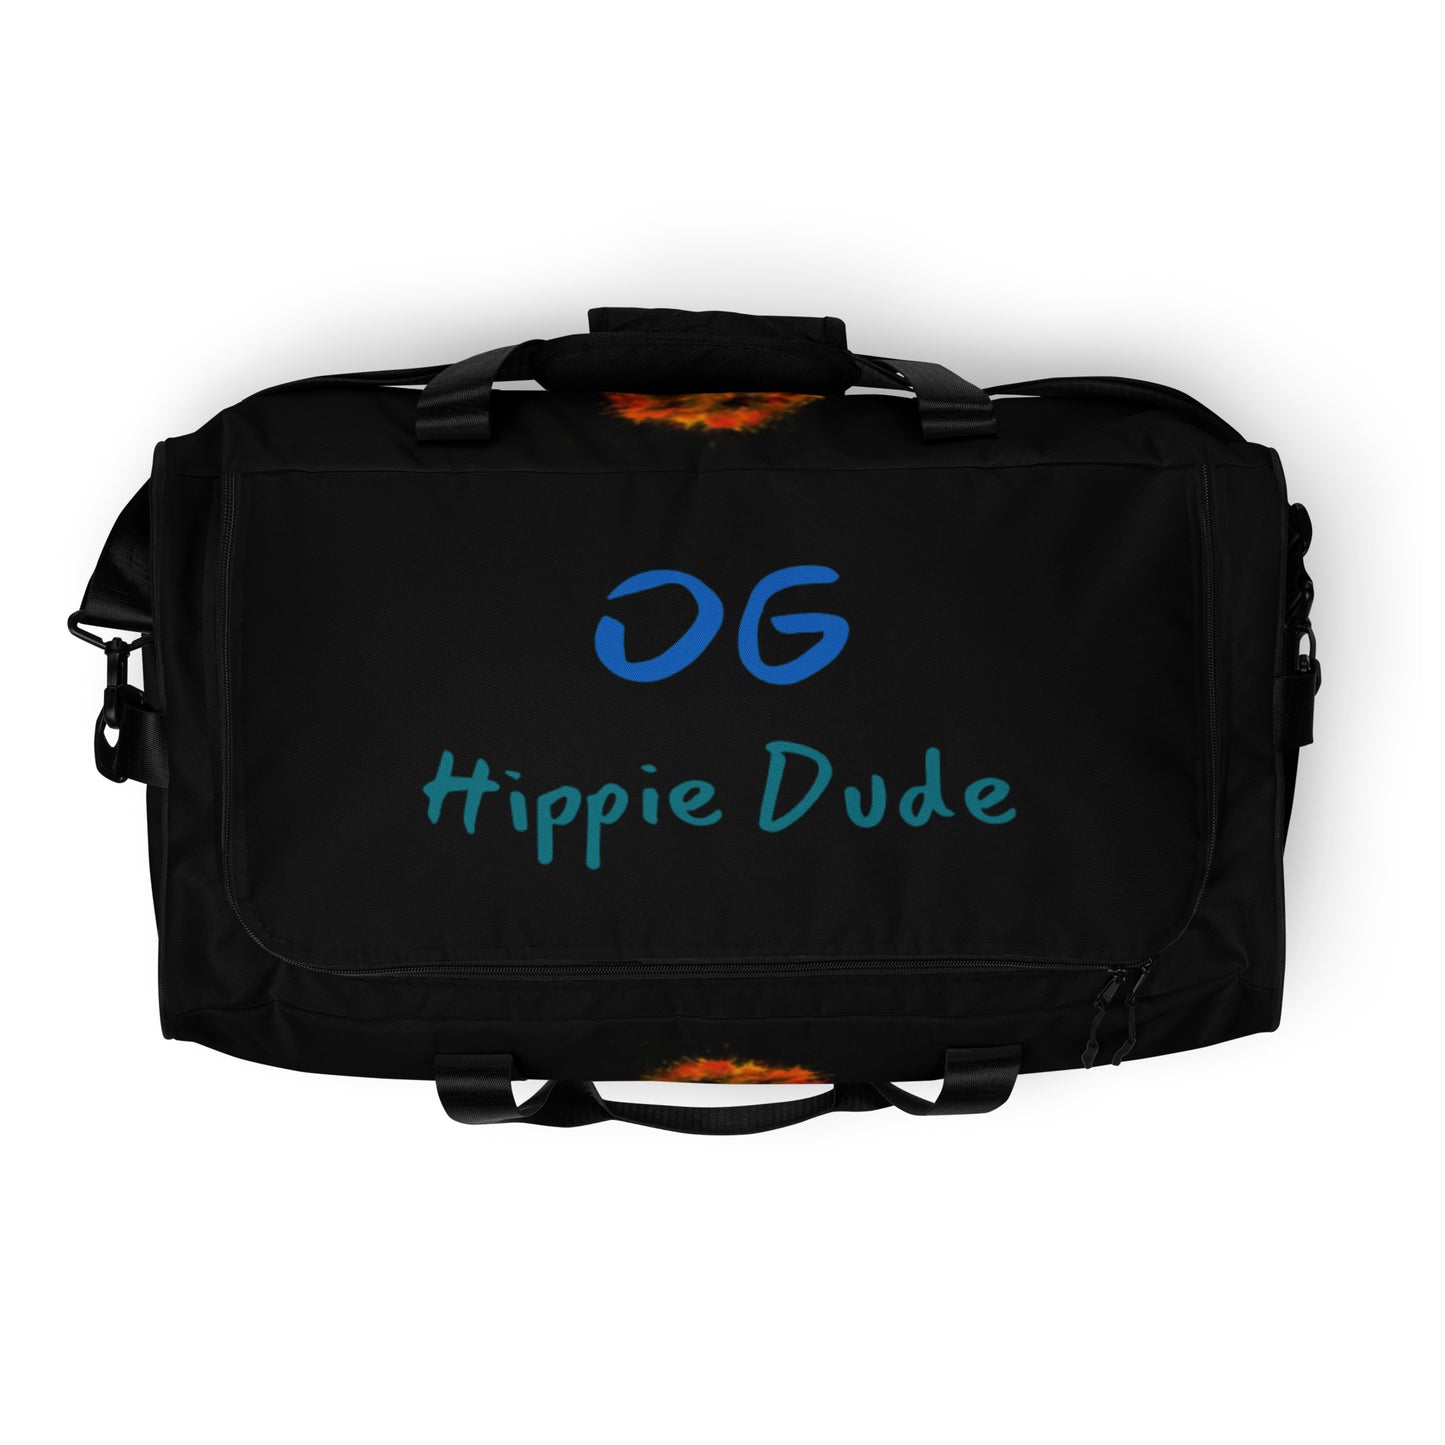 Black Duffle Bag - OG Hippie Dude